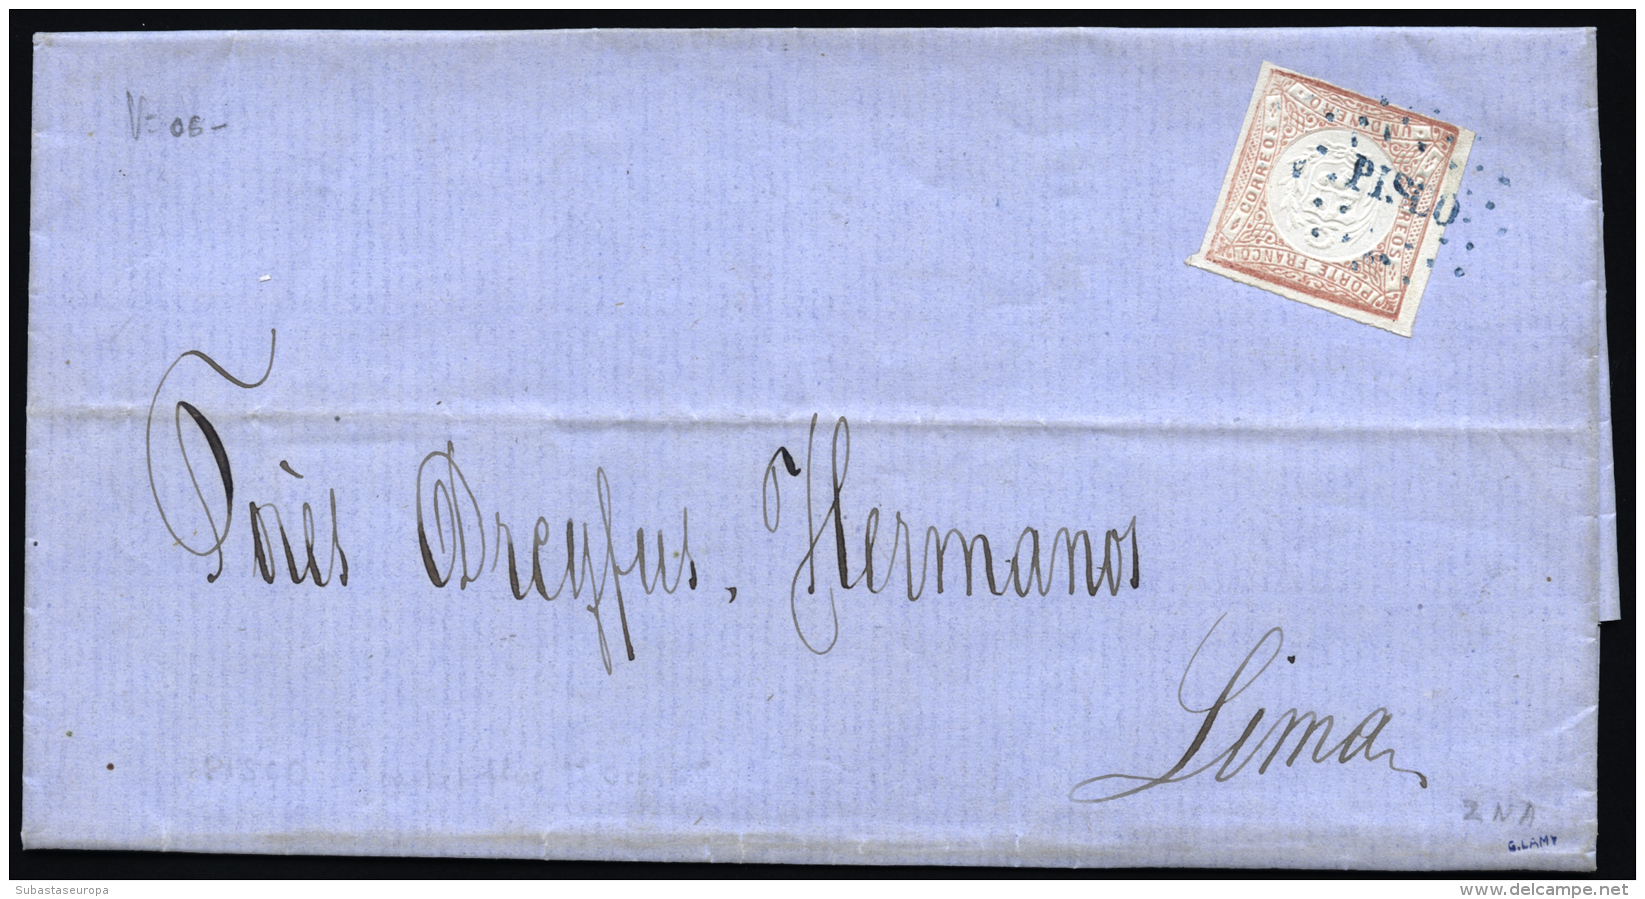 PERU. Ø 8 En Carta Completa Circulada A Lima, El 19/10/1865. Marca "PISCO" En Azul. Marquila Lamy. Llegada... - Peru